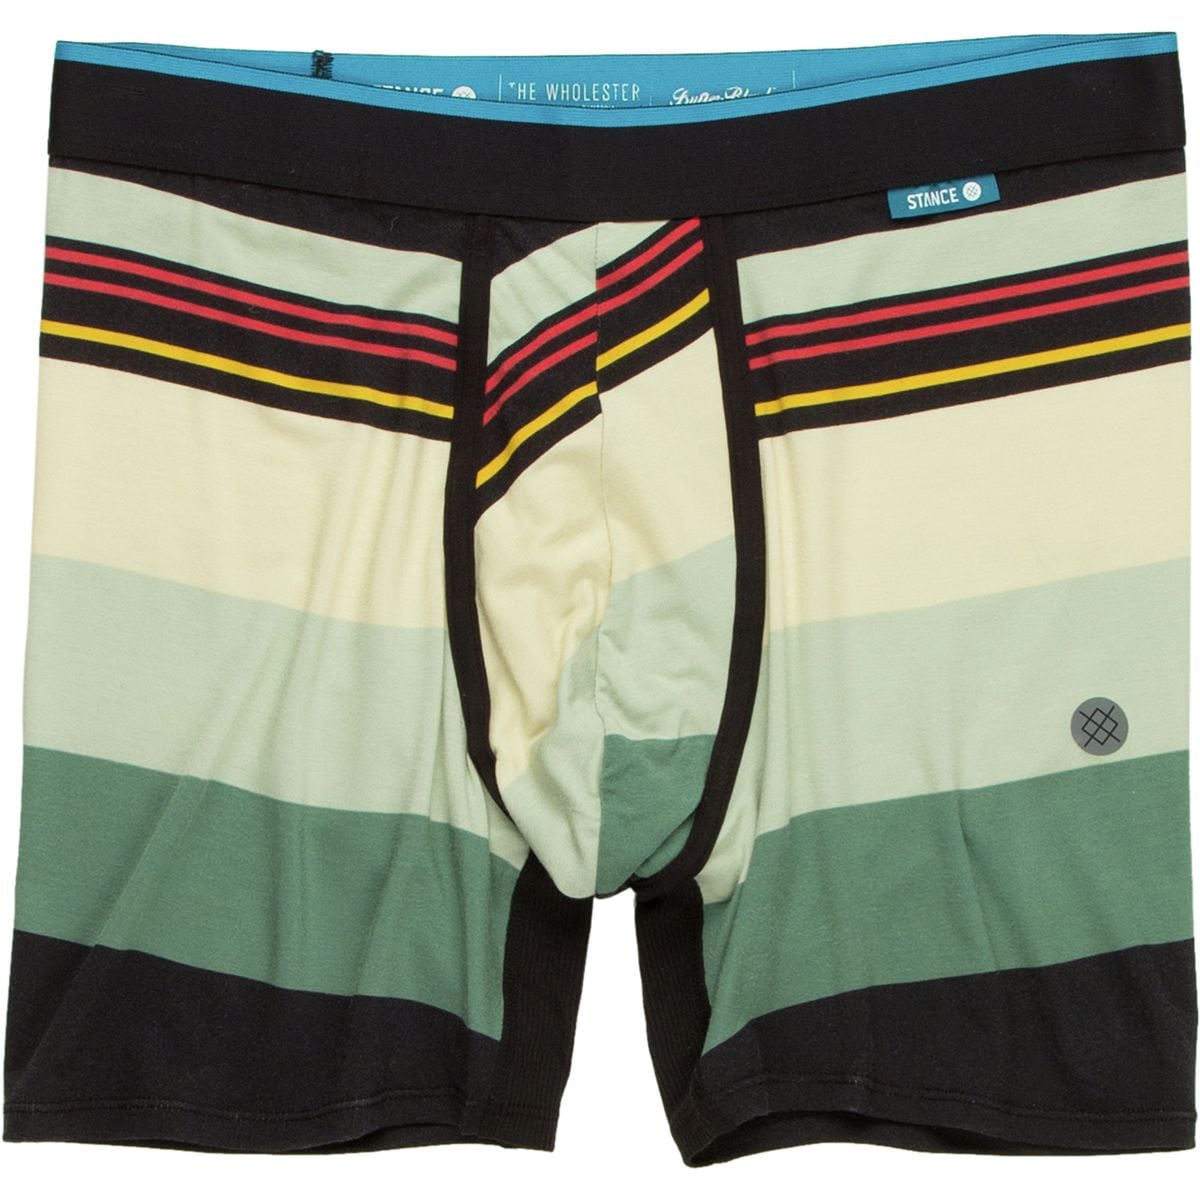 Stance Wholester Chamber Underwear - Men's | eBay